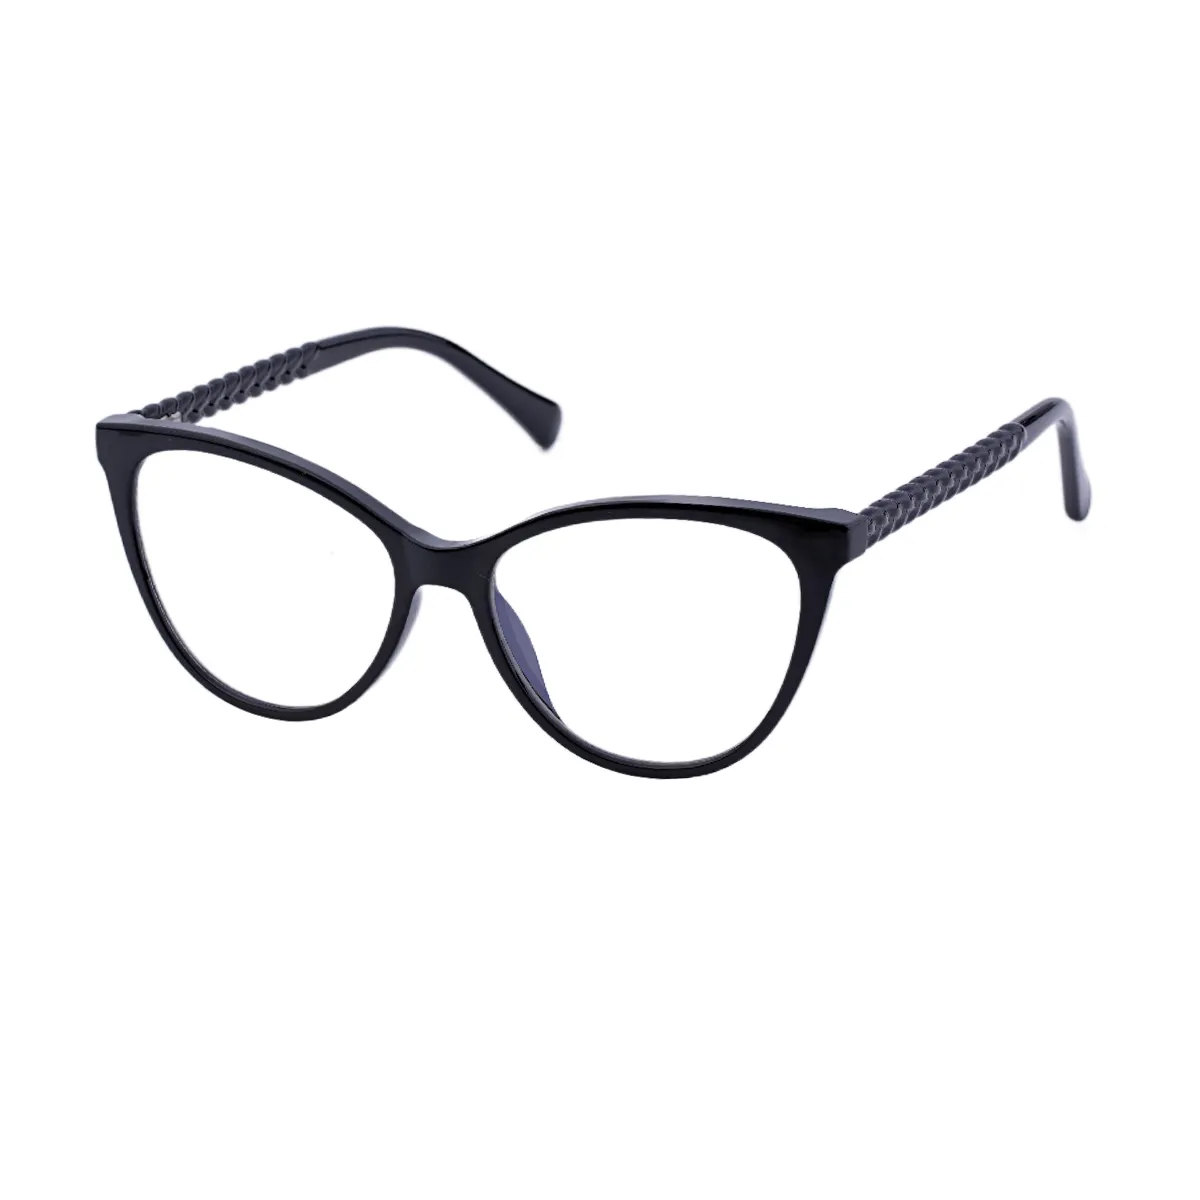 Fashion Cat-eye Black Eyeglasses for Women